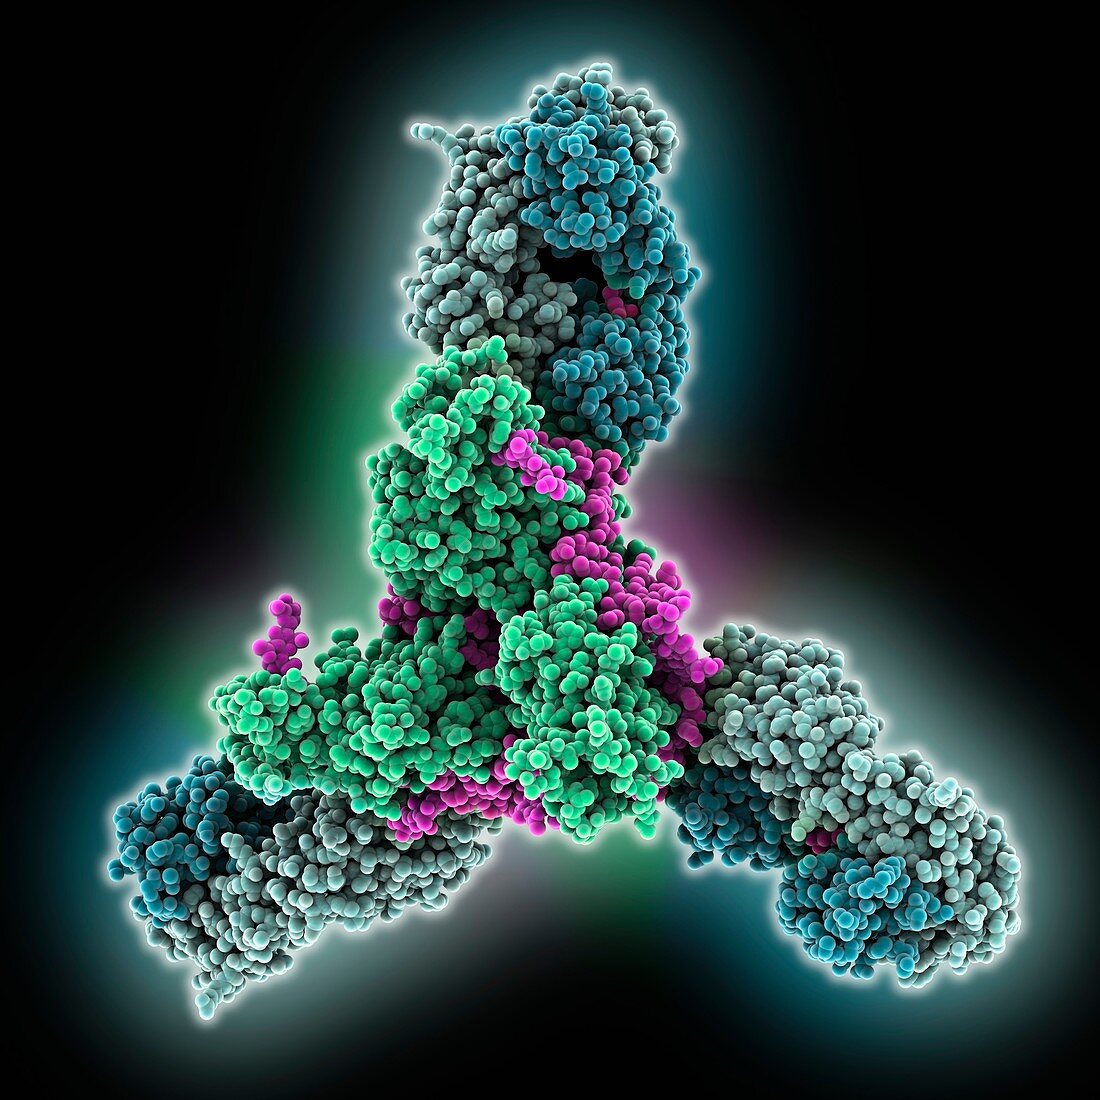 Ebola virus glycoprotein complex